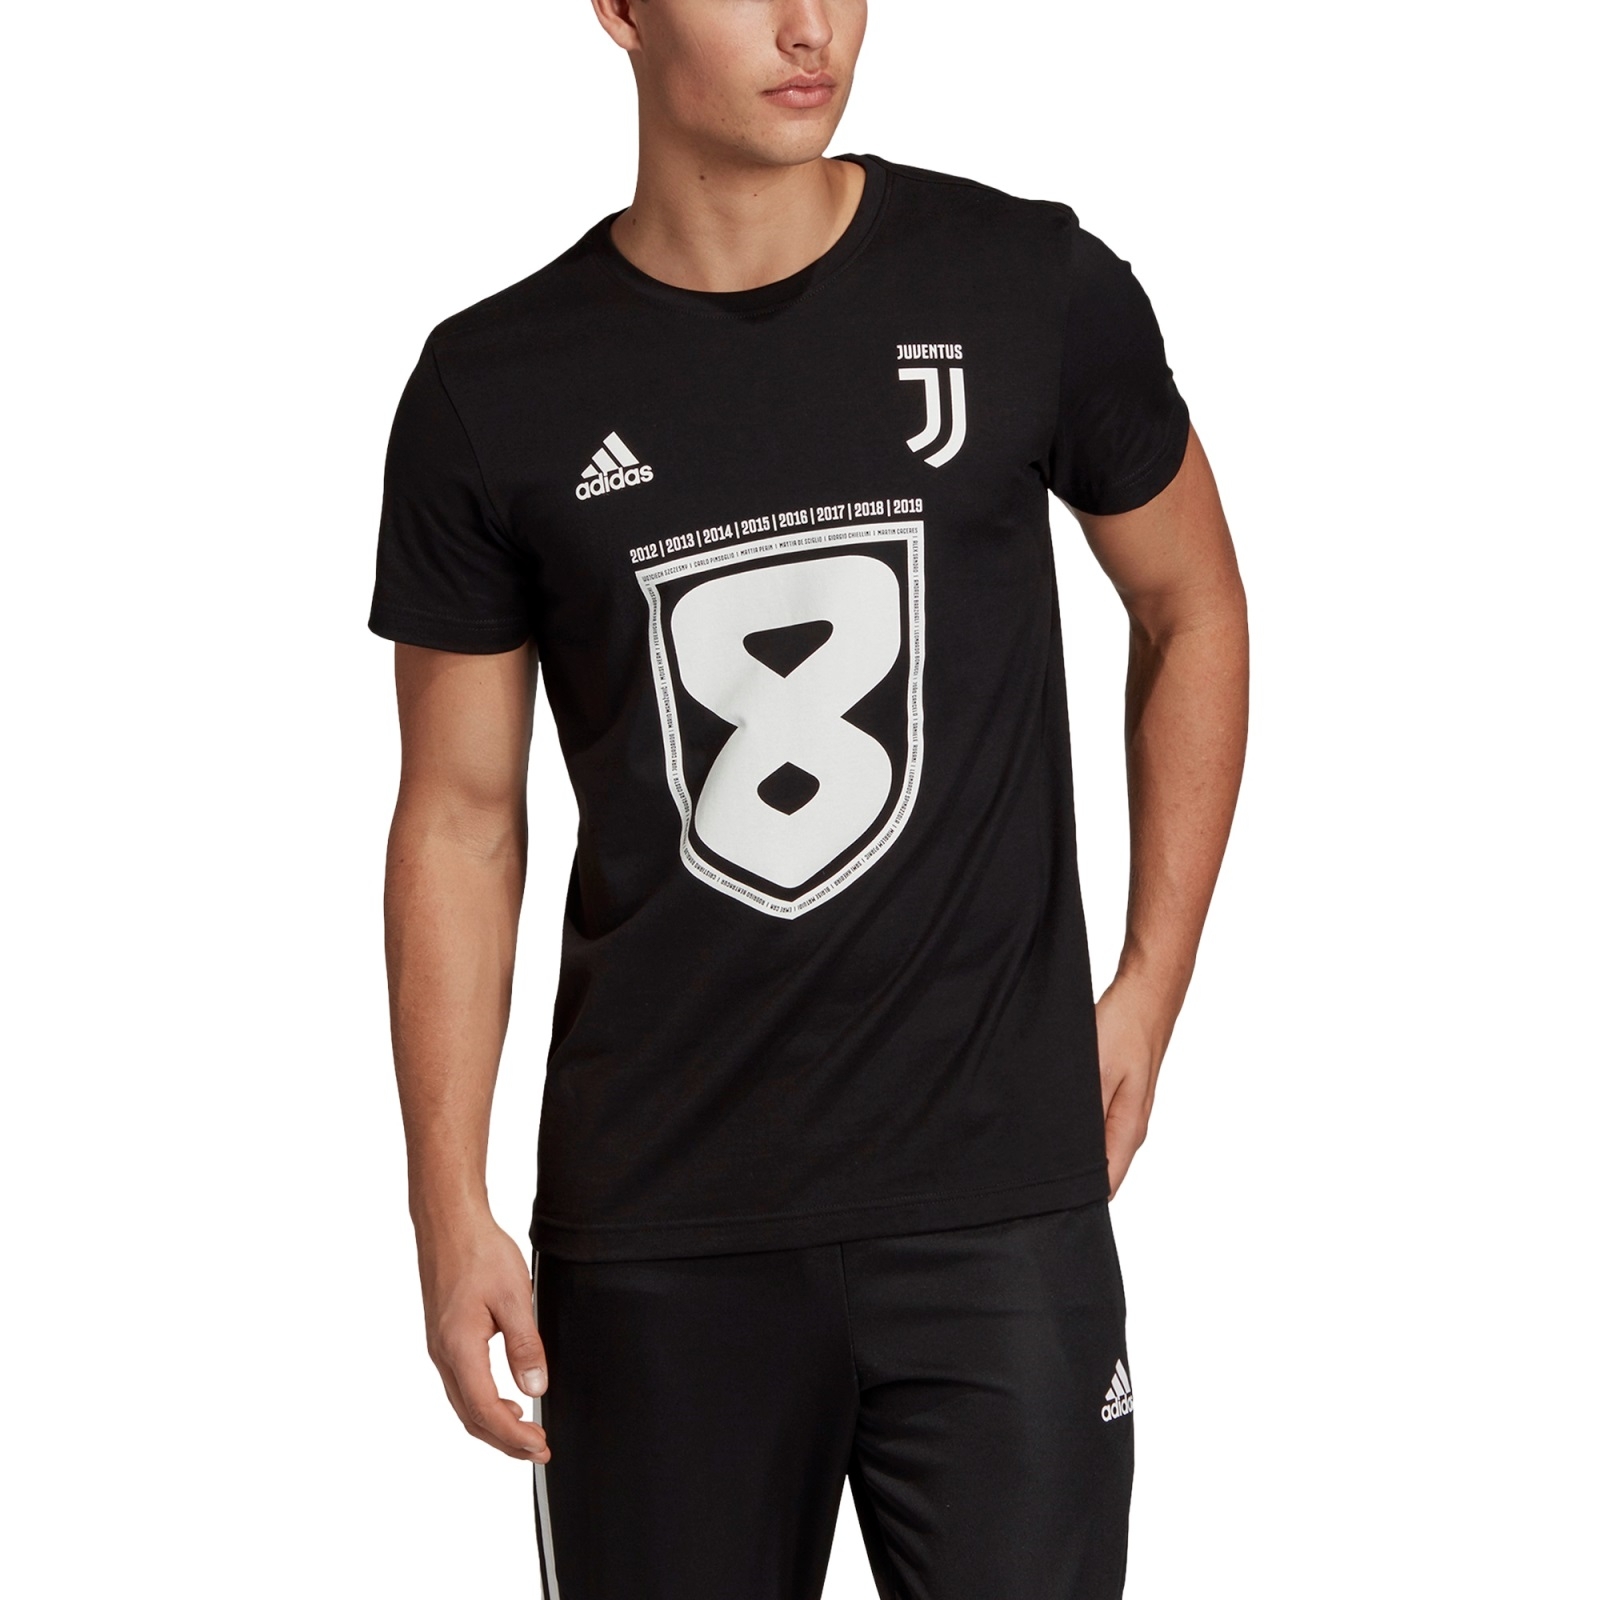 T-shirt Juventus Campione Calcio Bambino Juve PS 06209 